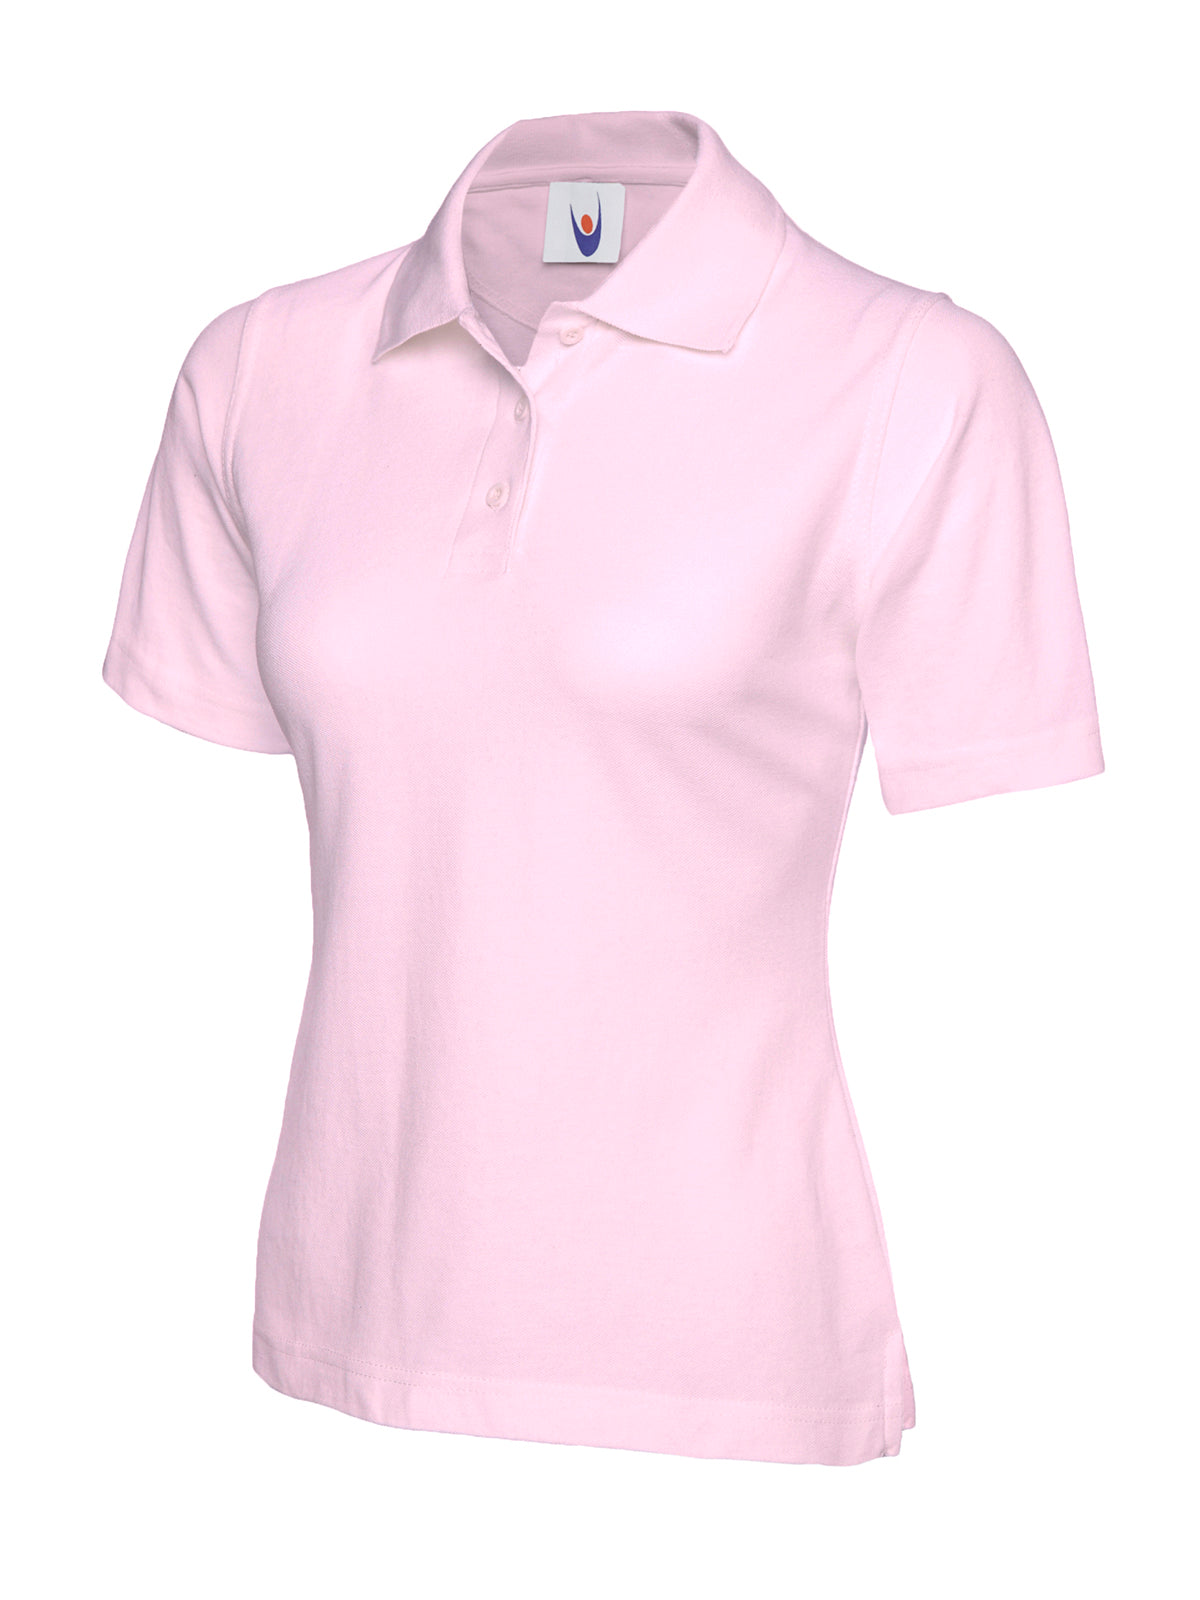 Uneek Ladies Classic Poloshirt UC106 - Pink